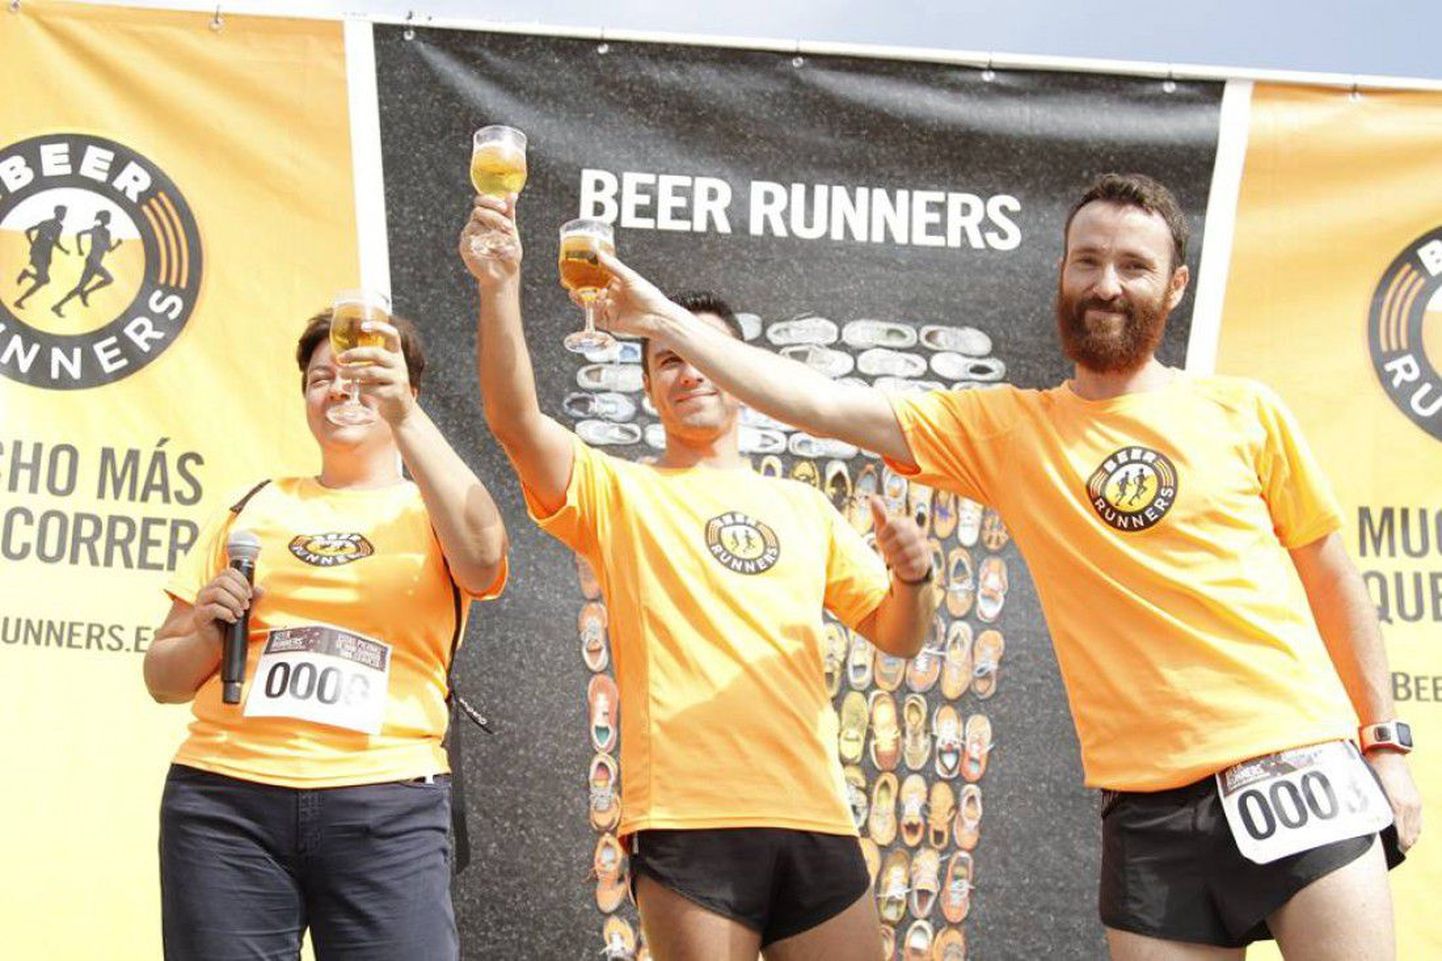 Тройка победителей забега Beer Runners